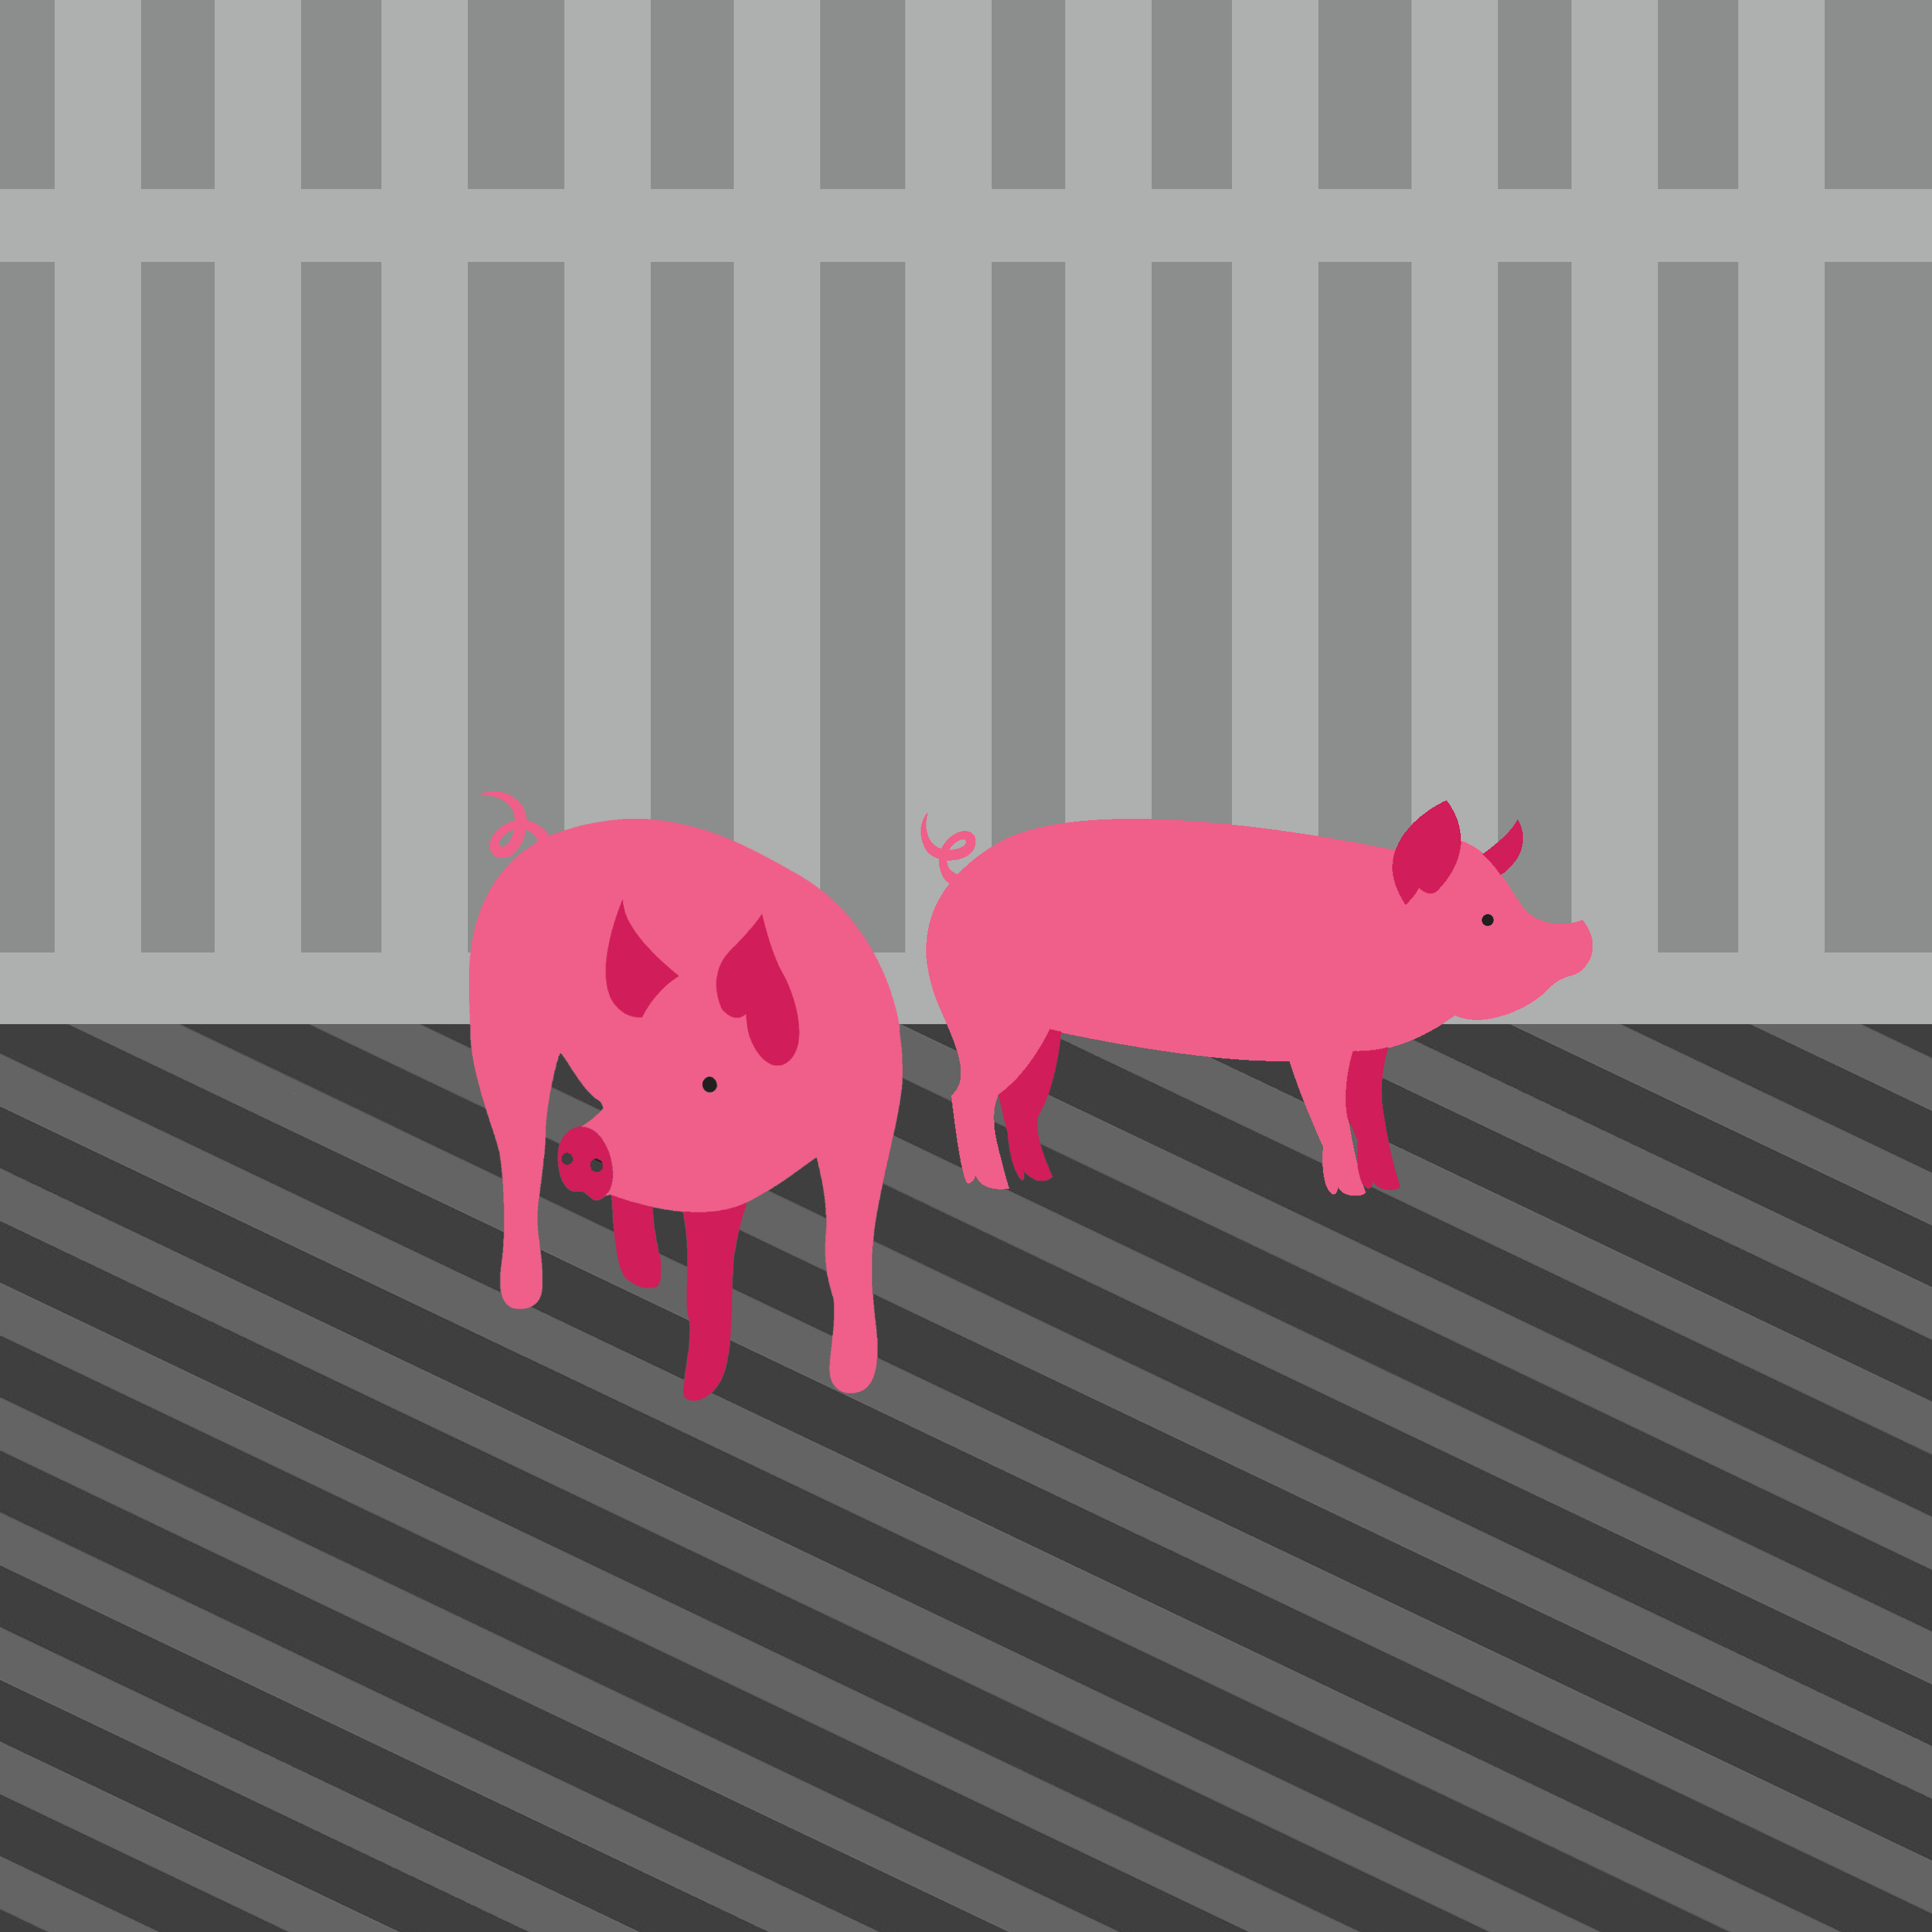 Piglets growing farm